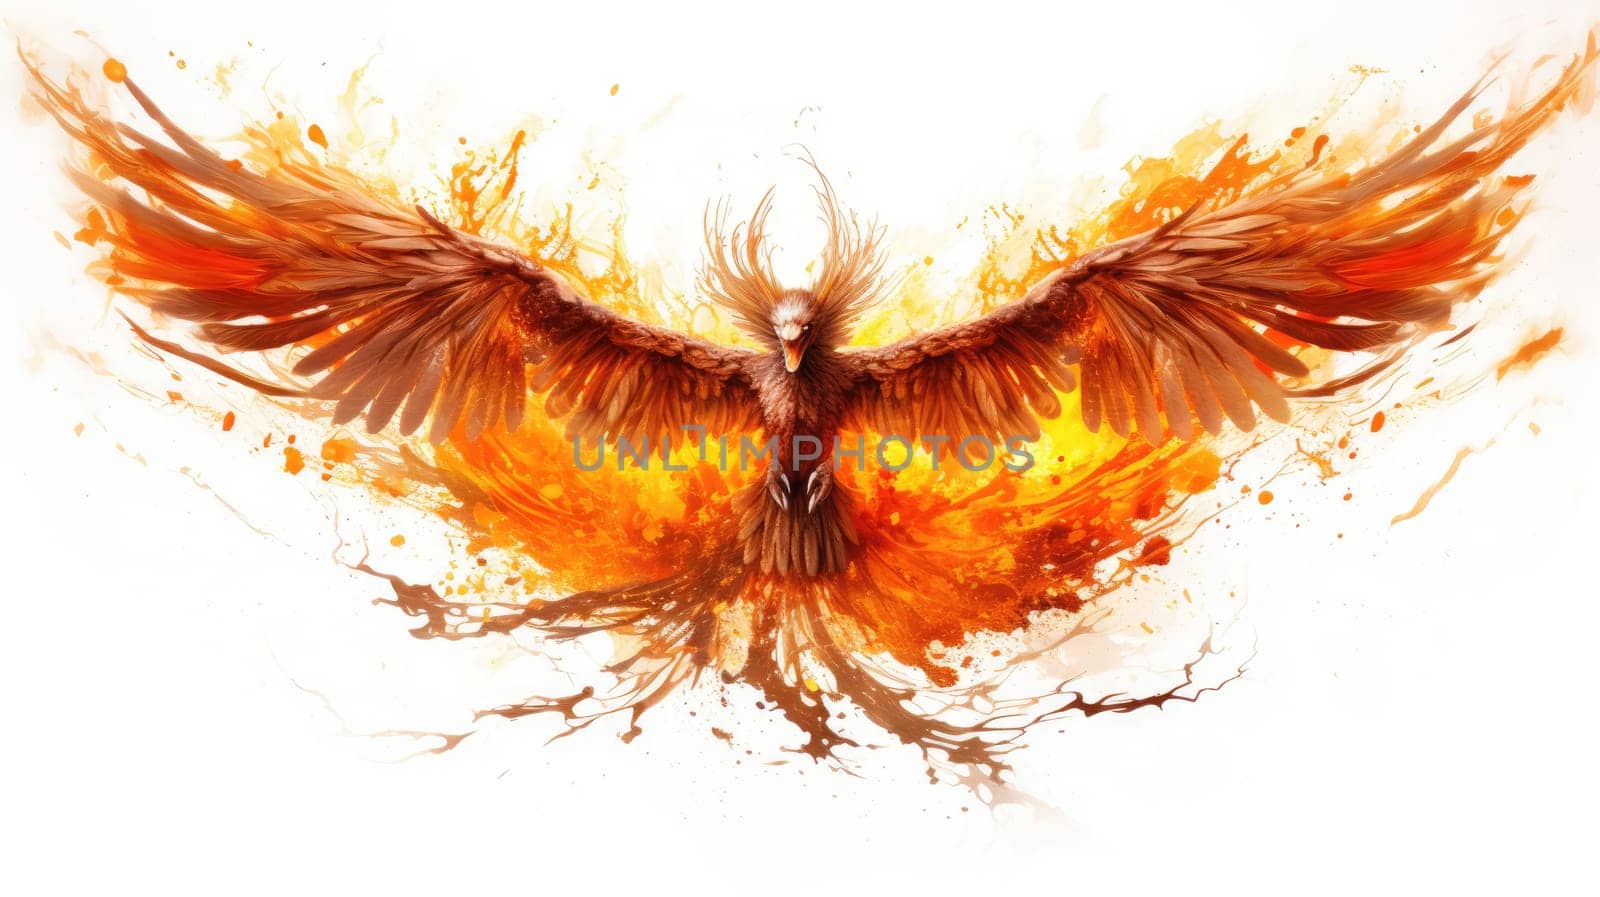 Molten phoenix watercolor illustration - Generative AI. Molten, phoenix, fire, wings. by simakovavector